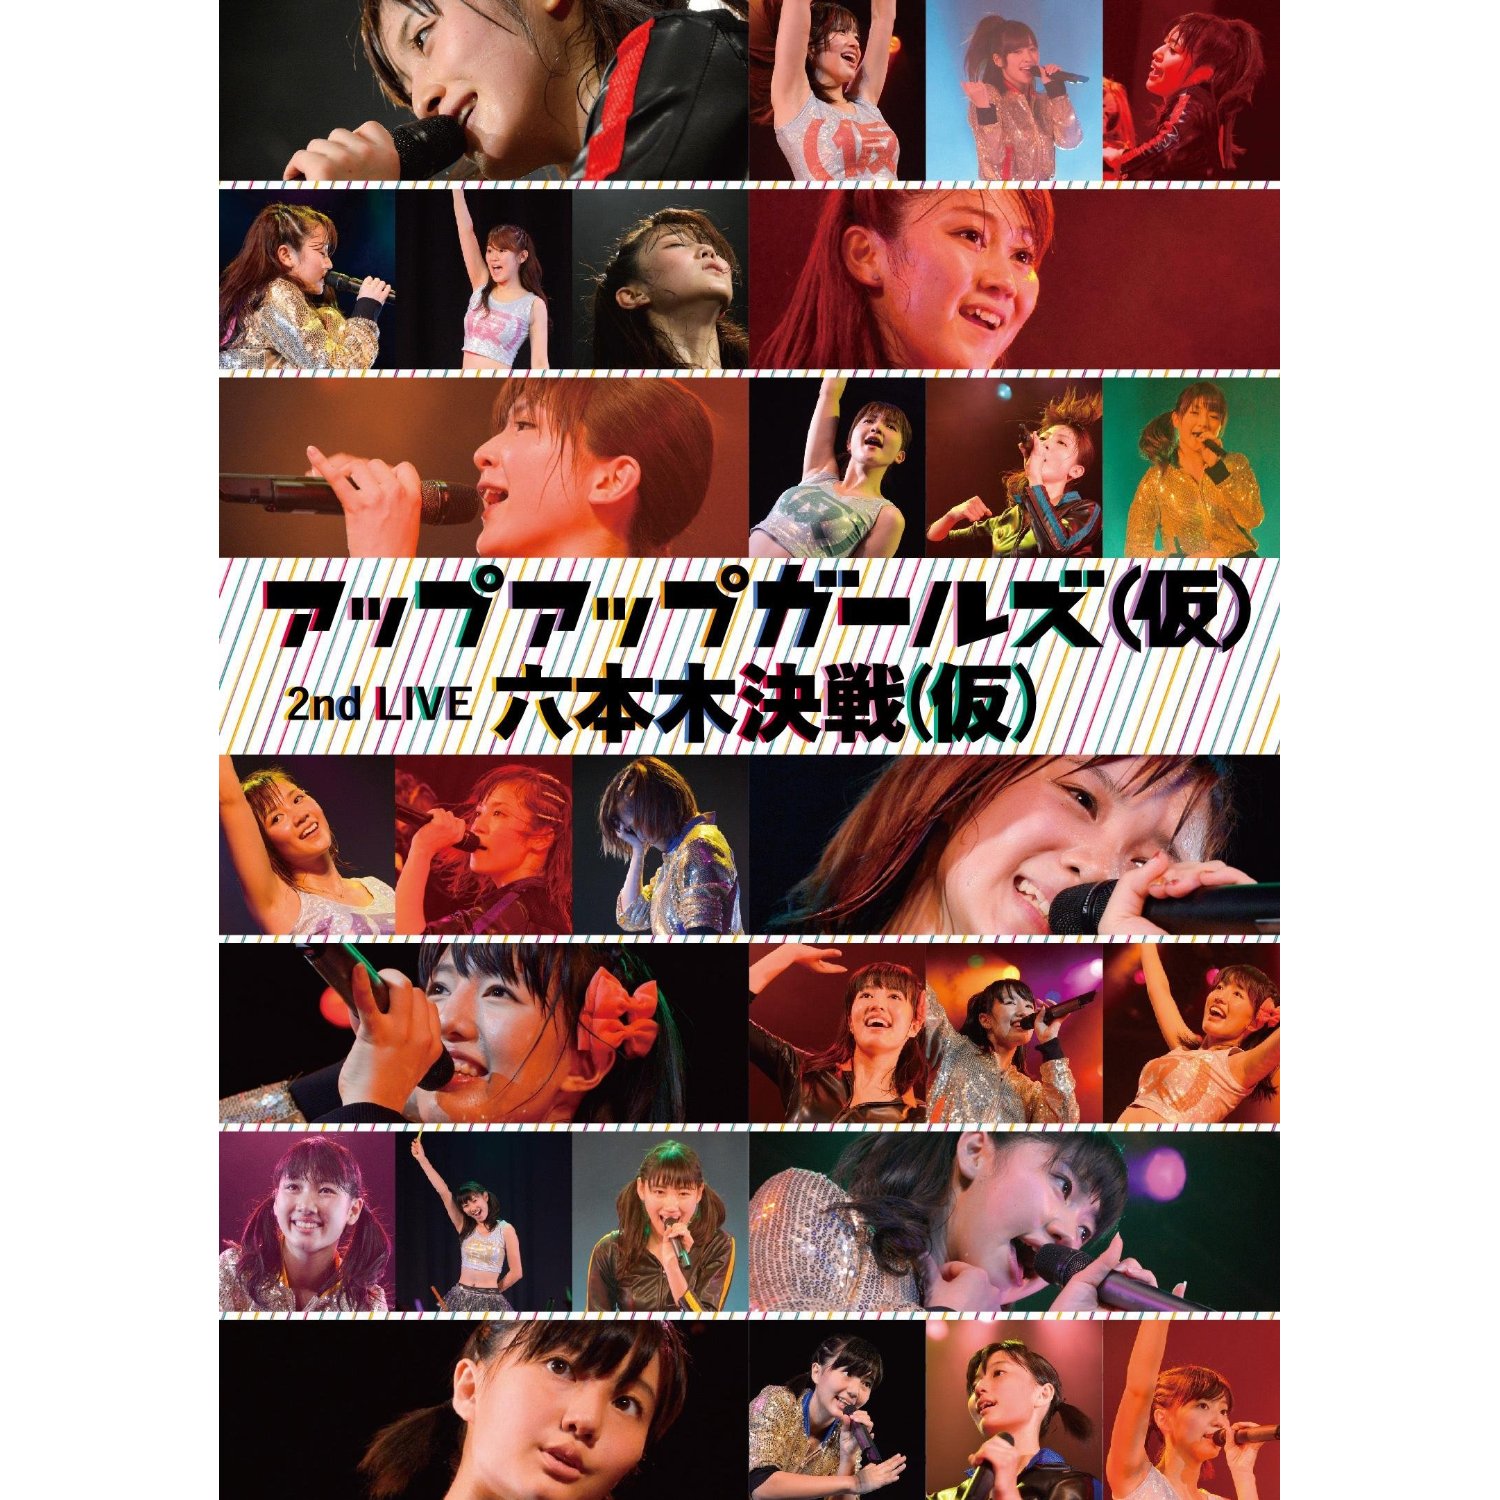 UPUPGIRLS released the digest movie for their new DVD “Roppongi Kessen Live”